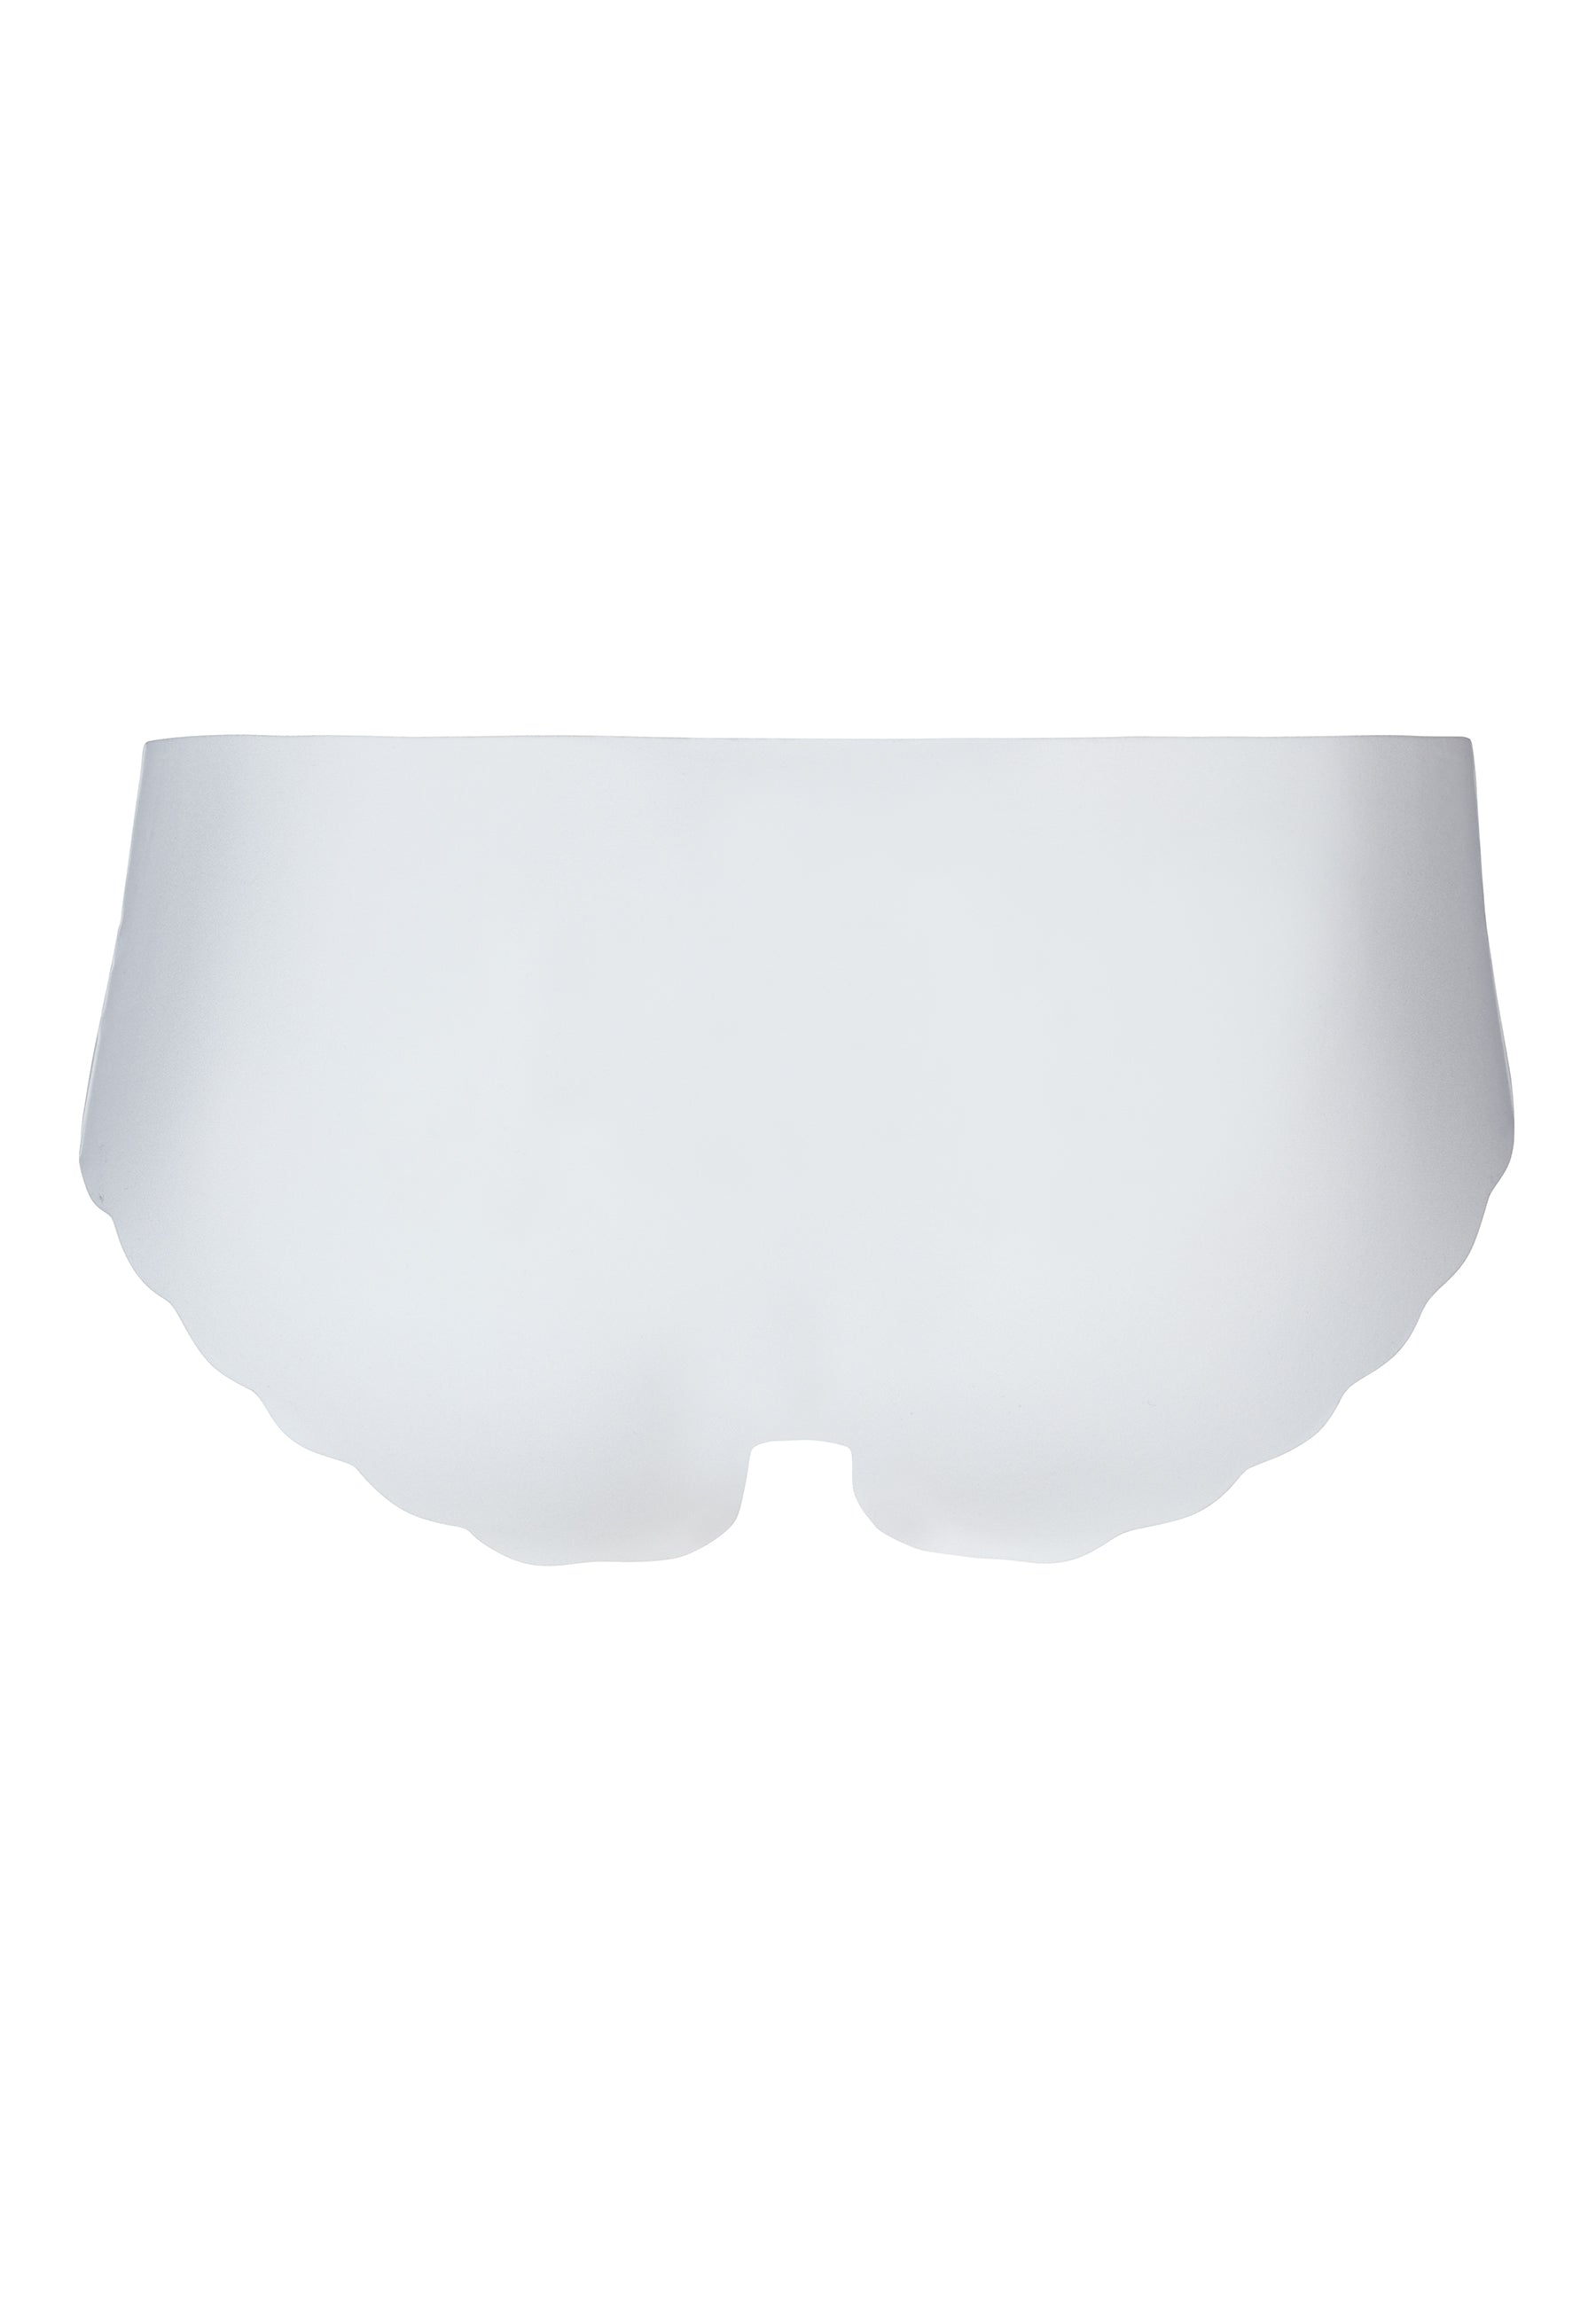 Skiny Damen Panty Micro Essentials (White)